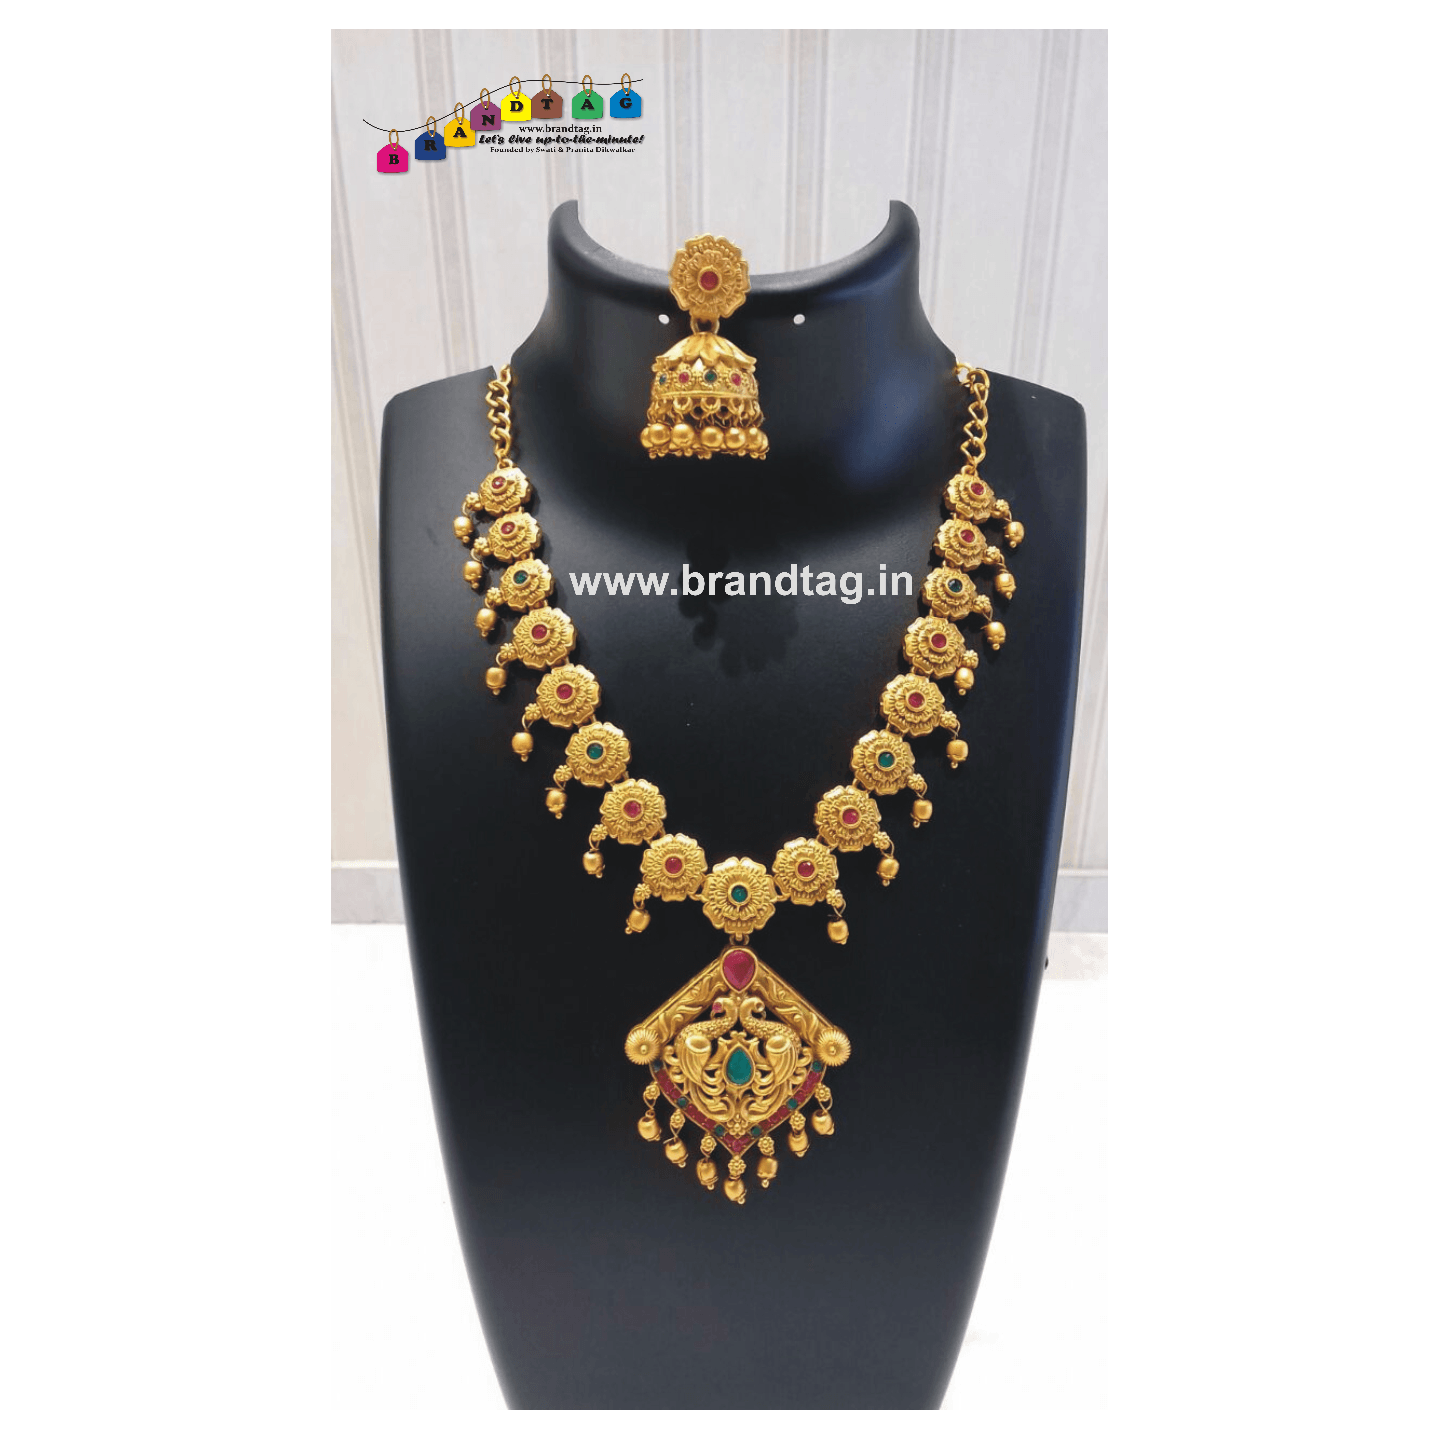 Diwali Collection - Matt finished Golden Necklace Set!